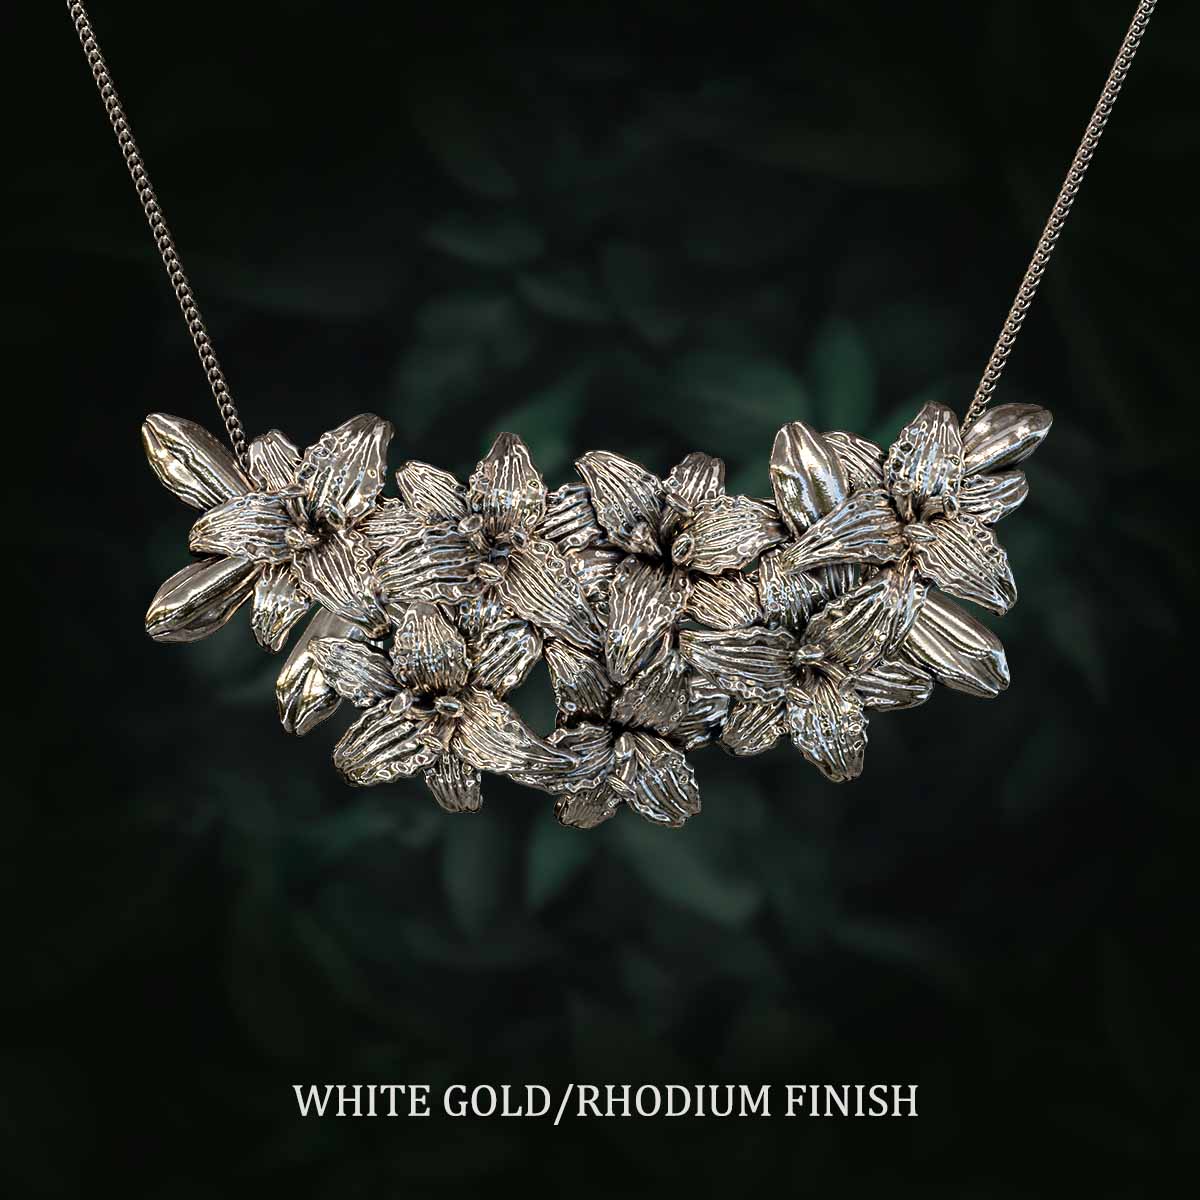 White-Gold-Rhodium-Finish-Daylily-Flowers-Large-Pendant-Jewelry-For-Necklace